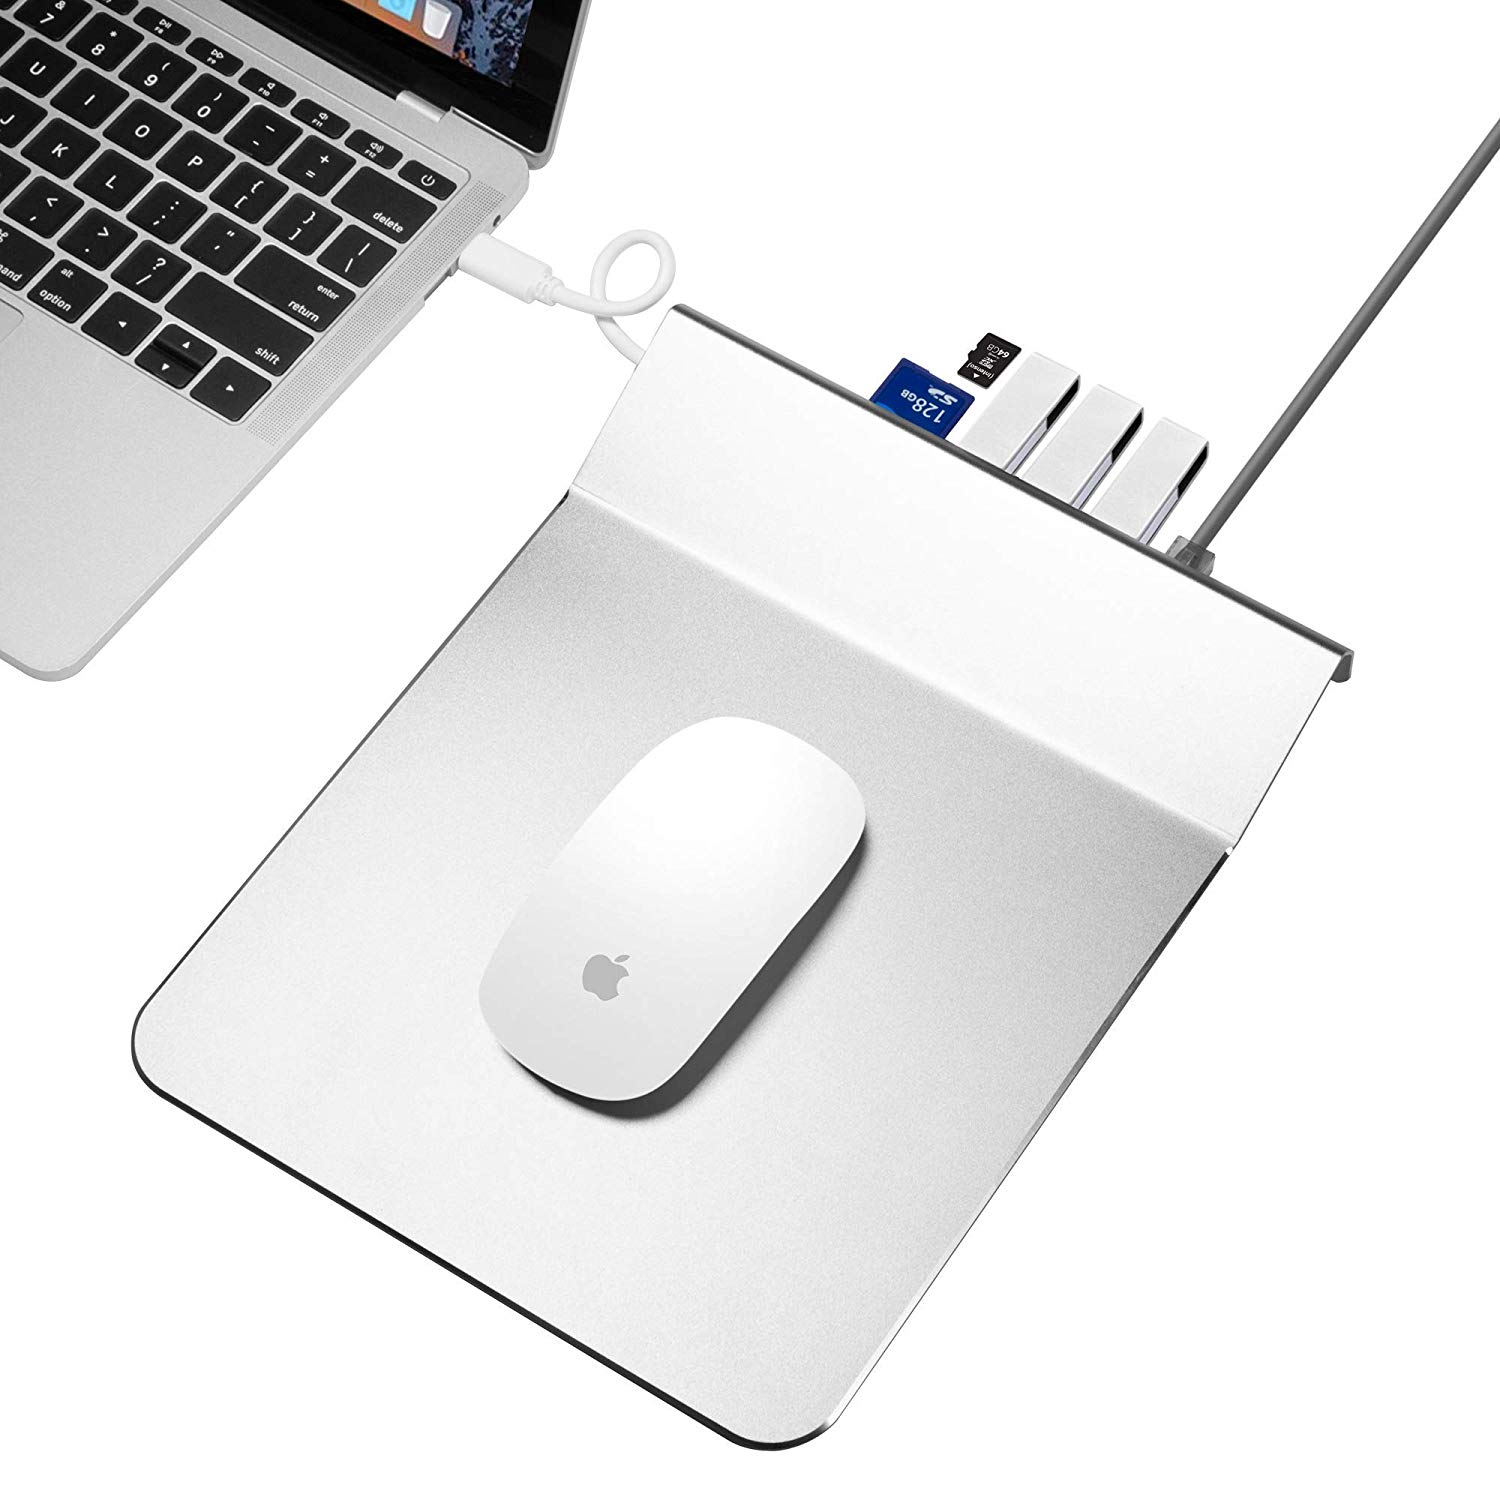 VOAMOKO Aluminum Mouse Pad With USB Hub